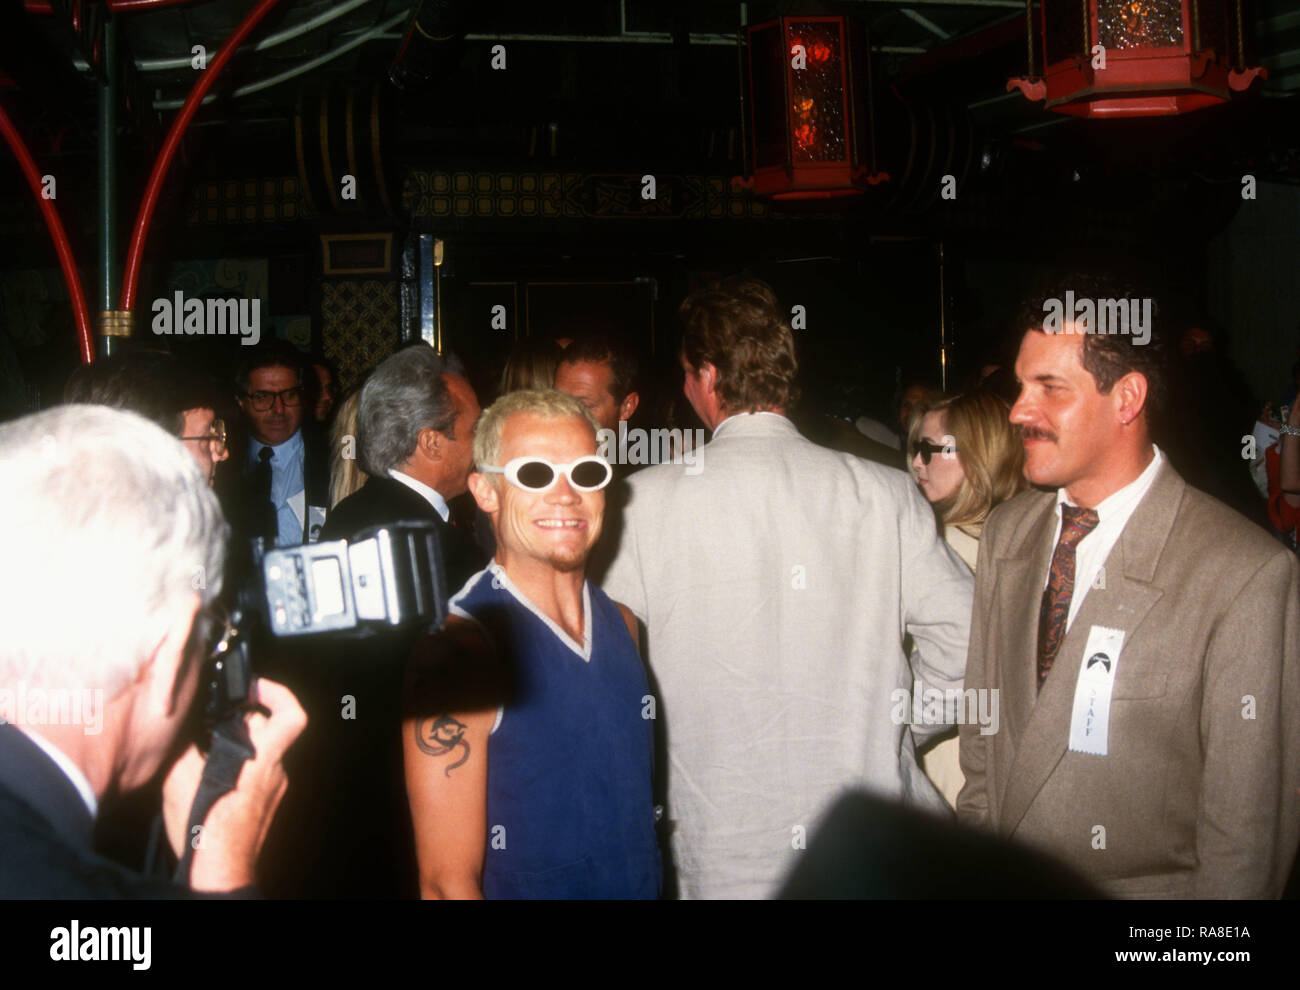 HOLLYWOOD, CA - le 19 juillet : Brocante de musicien Les Red Hot Chili Peppers assiste à Paramount Pictures' 'Coneheads' création le 19 juillet 1993 au Mann Chinese Theatre à Hollywood, Californie. Photo de Barry King/Alamy Stock Photo Banque D'Images